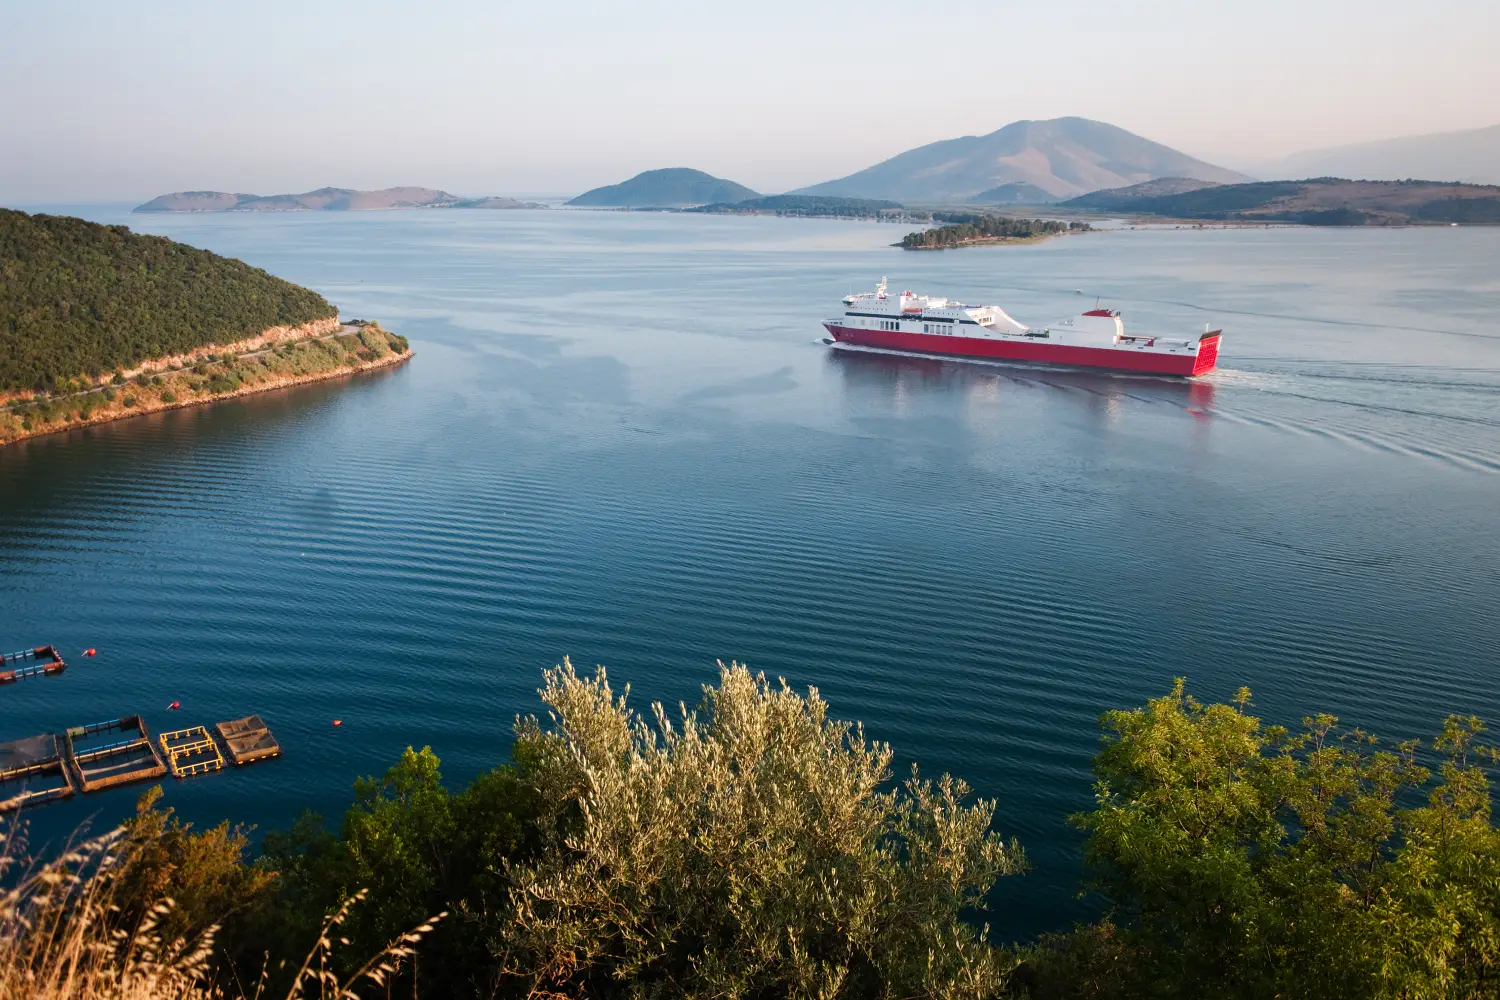 Ferry to Igoumenitsa - Red ferryboat navigate in the Gulf of Igoumenitsa to arrive in Italy.